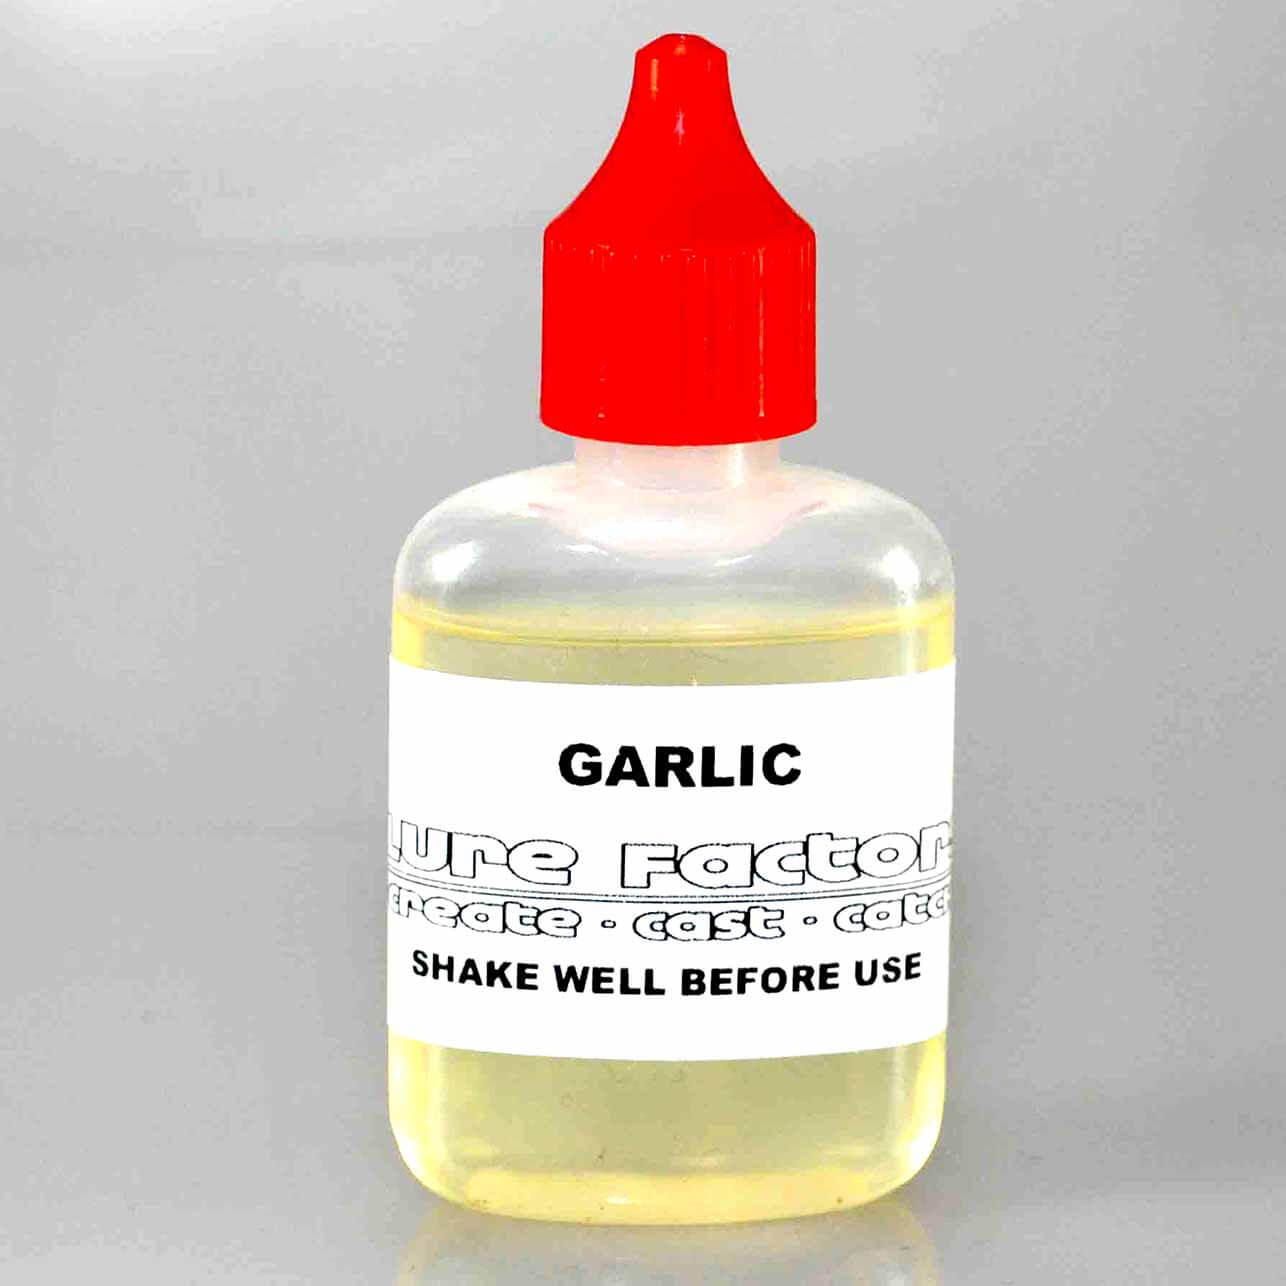 https://lurefactors.co.uk/images/products/Garlic_scent_128.jpg